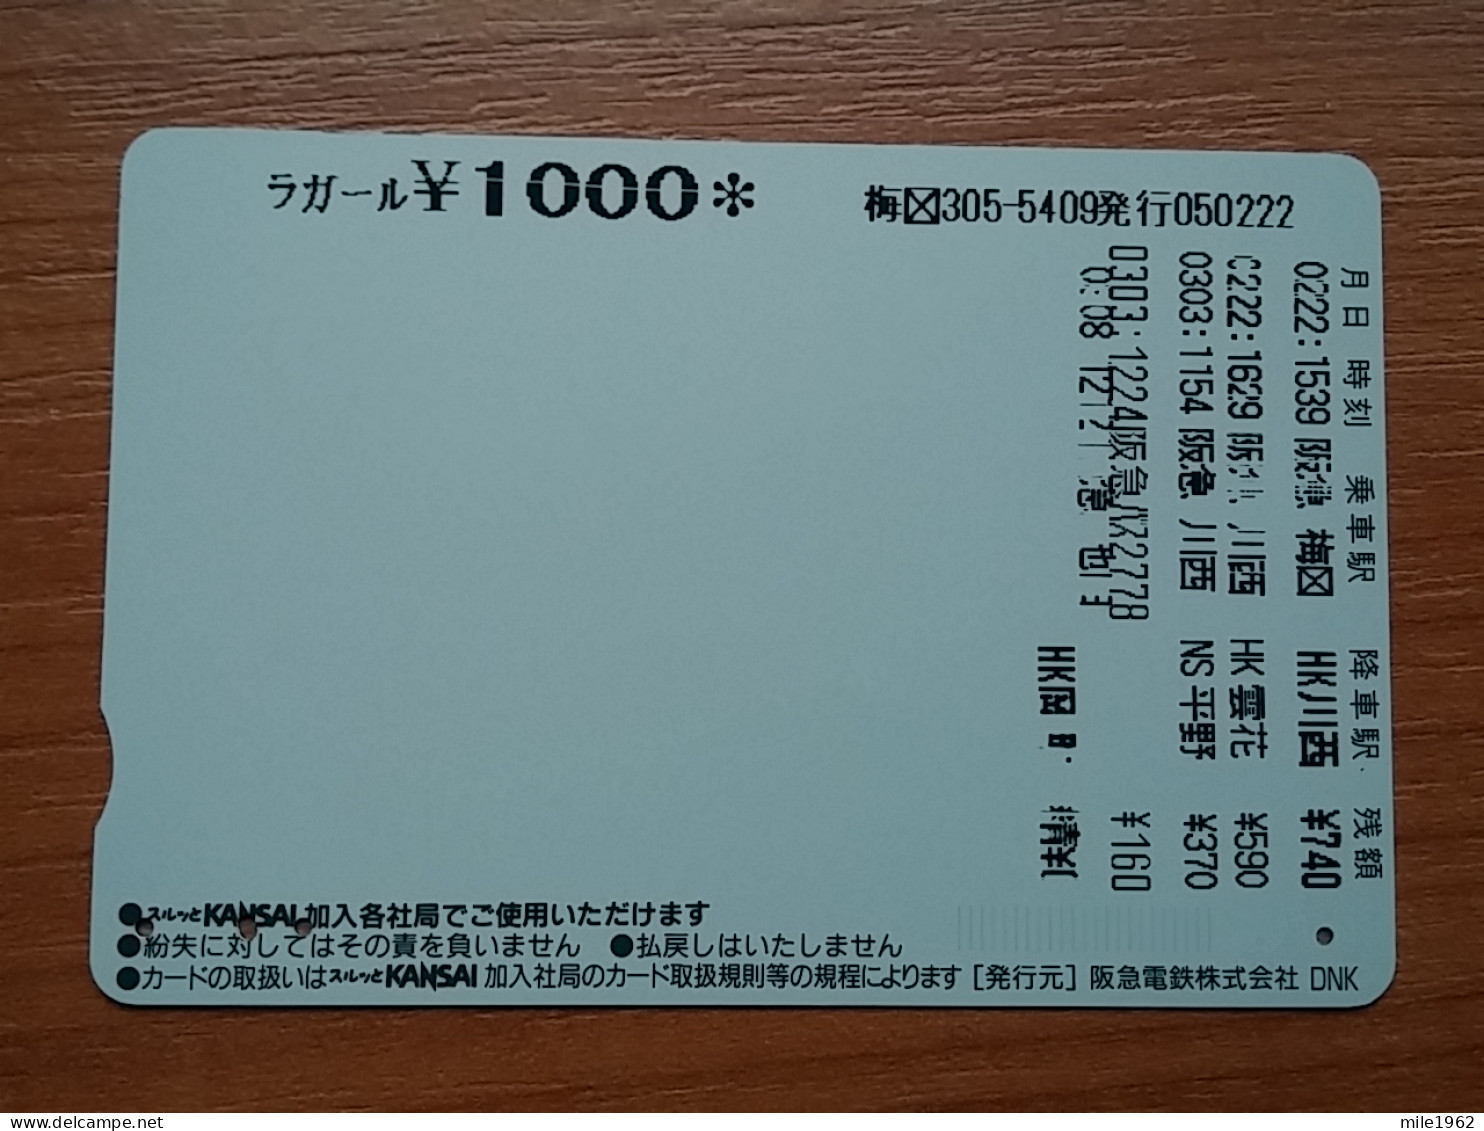 T-399 - JAPAN, Japon, Nipon, Carte Prepayee, Prepaid Card, Dog, Chien - Hunde